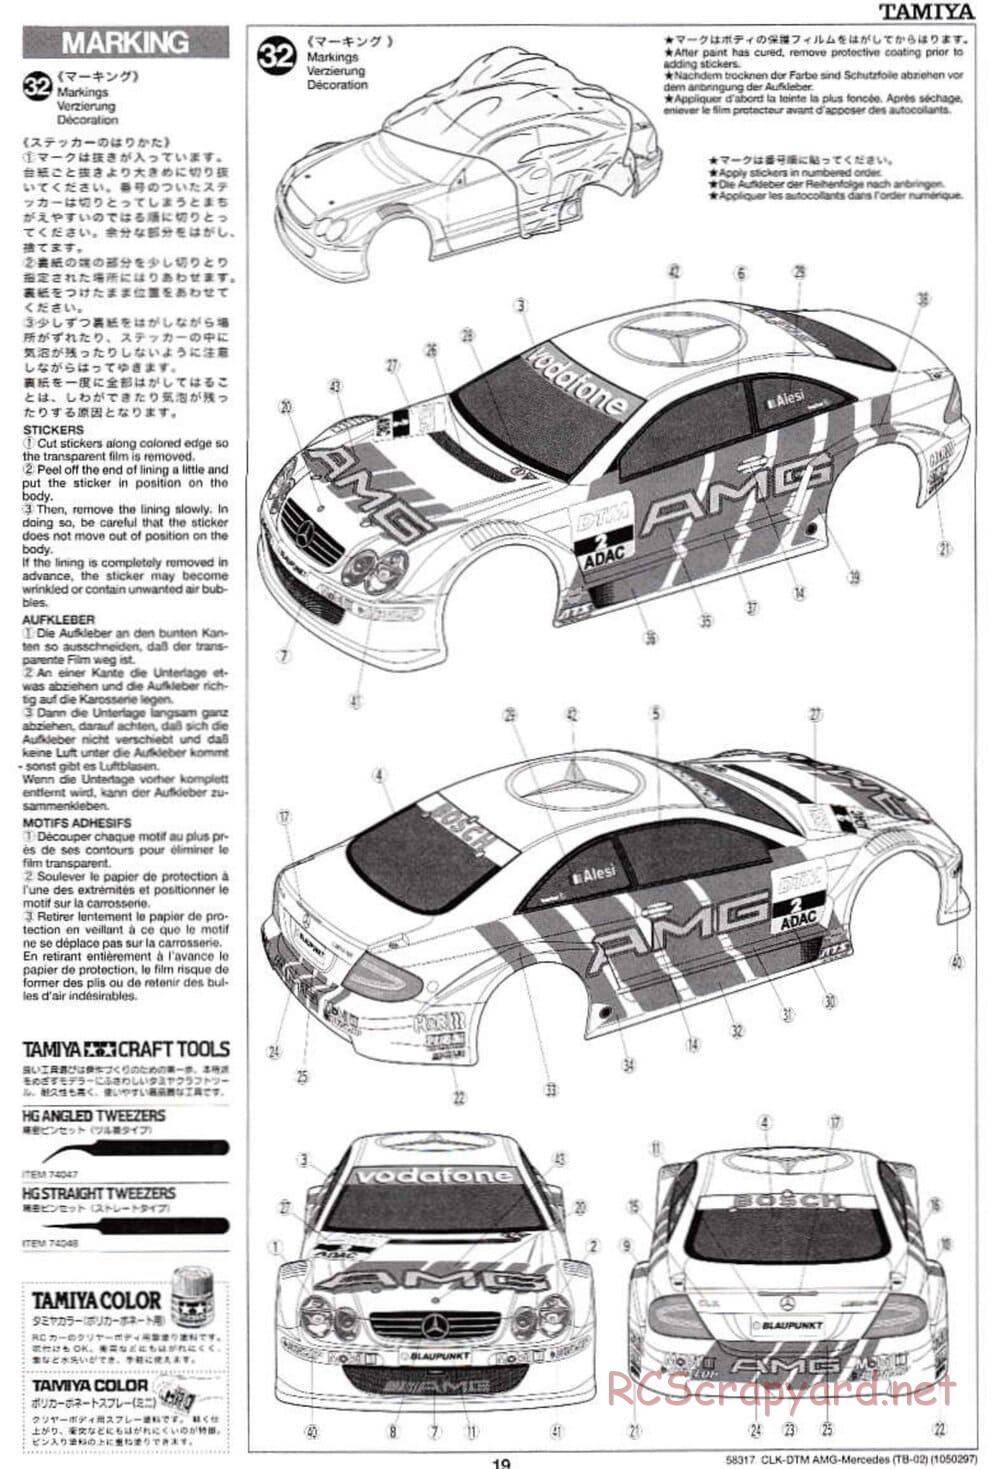 Tamiya - CLK DTM 2002 AMG Mercedes - TB-02 Chassis - Manual - Page 19